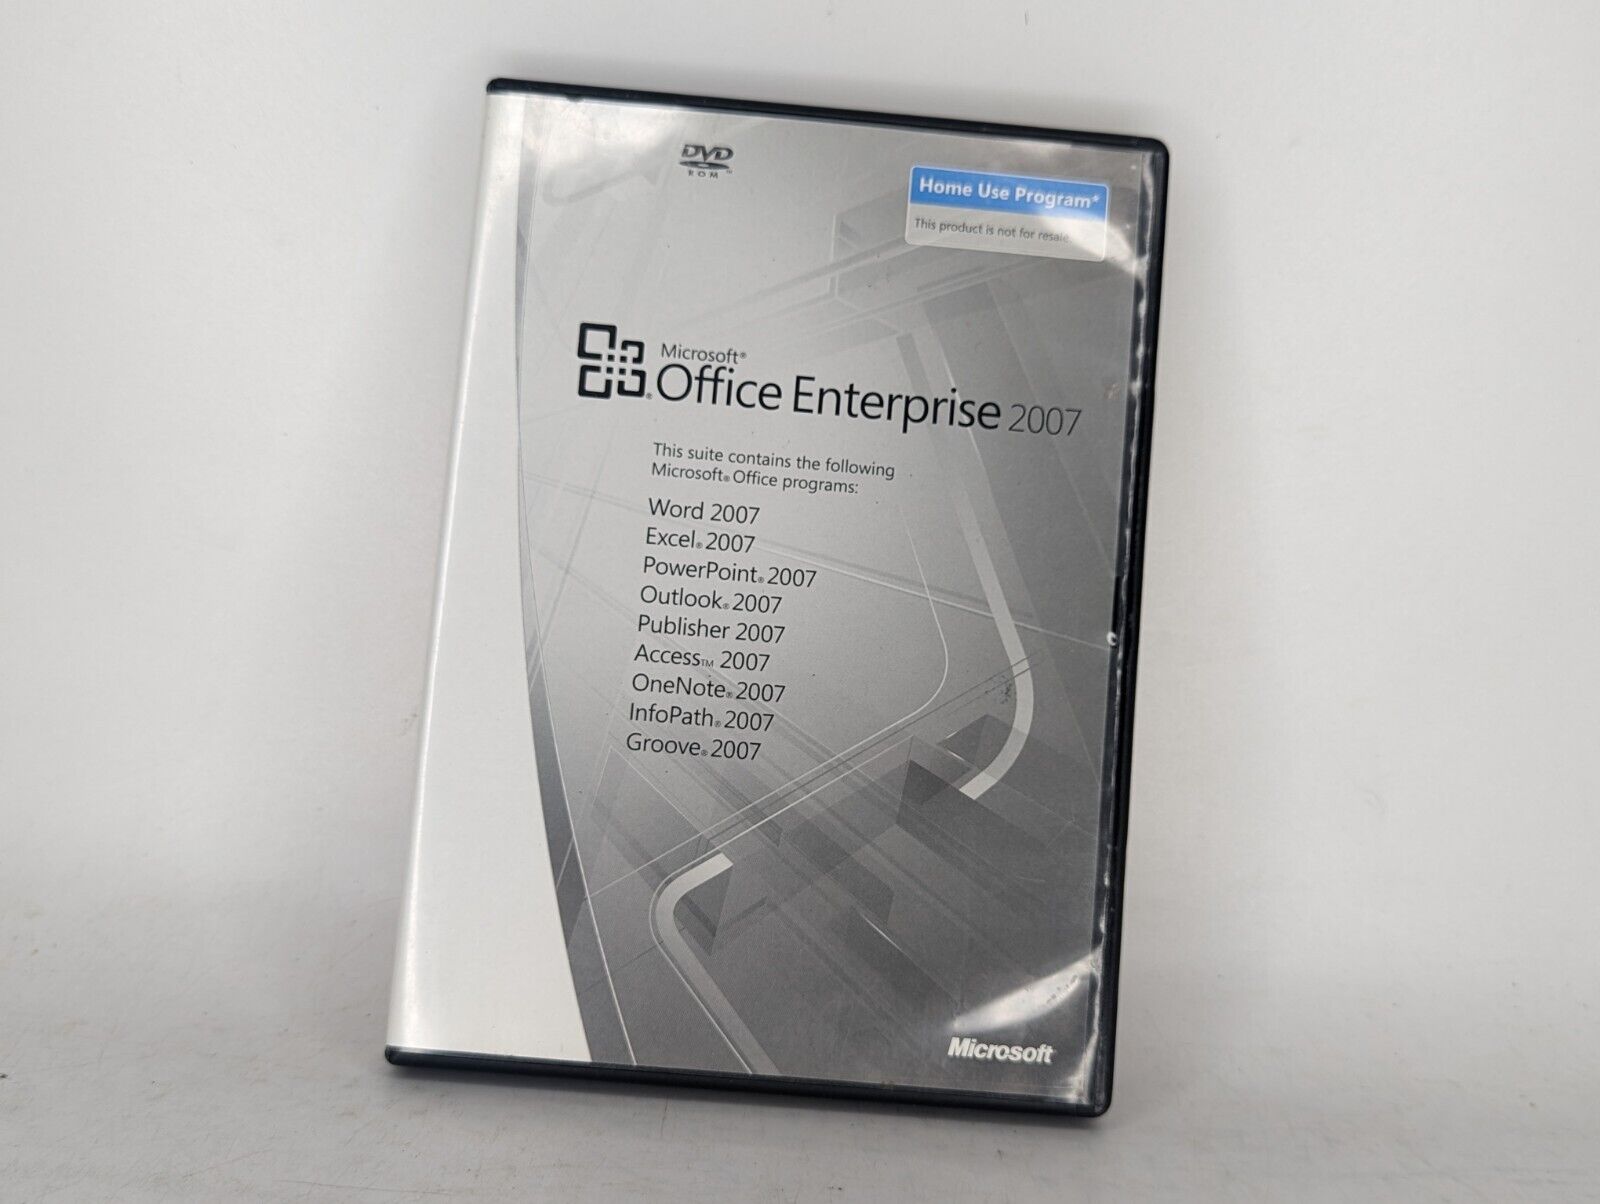 Microsoft Office Enterprise 2007 (Home Use) w/Key (Word, PowerPoint, Excel, Etc)